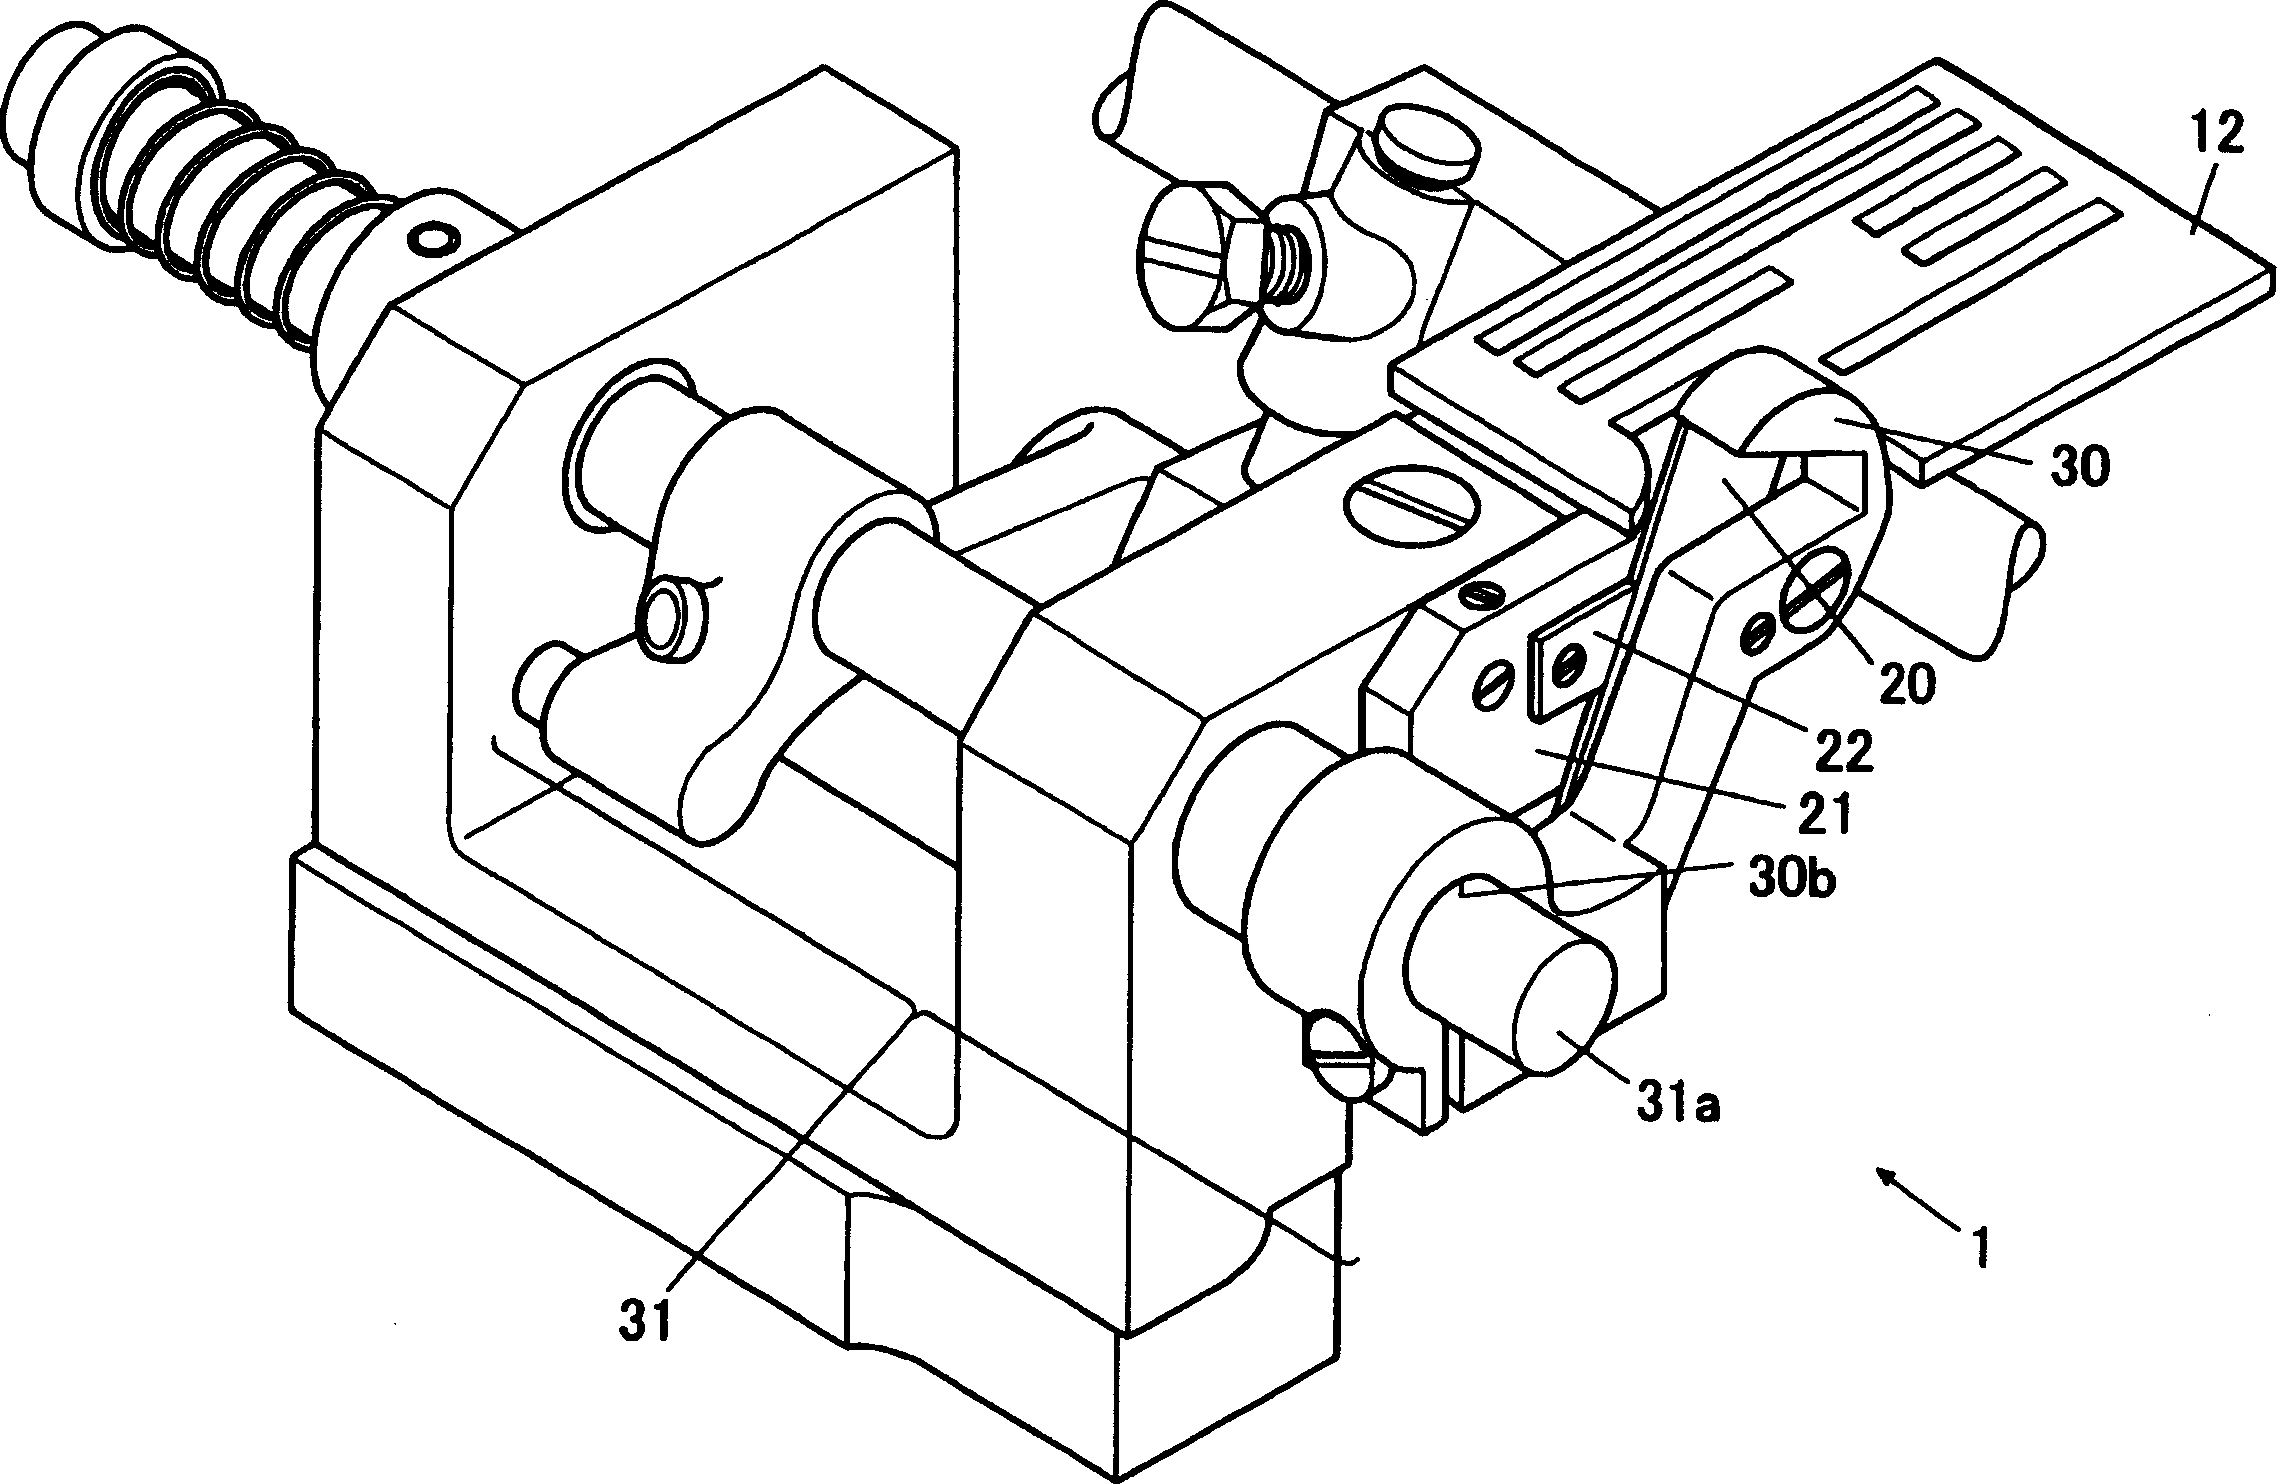 Cloth-cutting apparatus of sewing machine